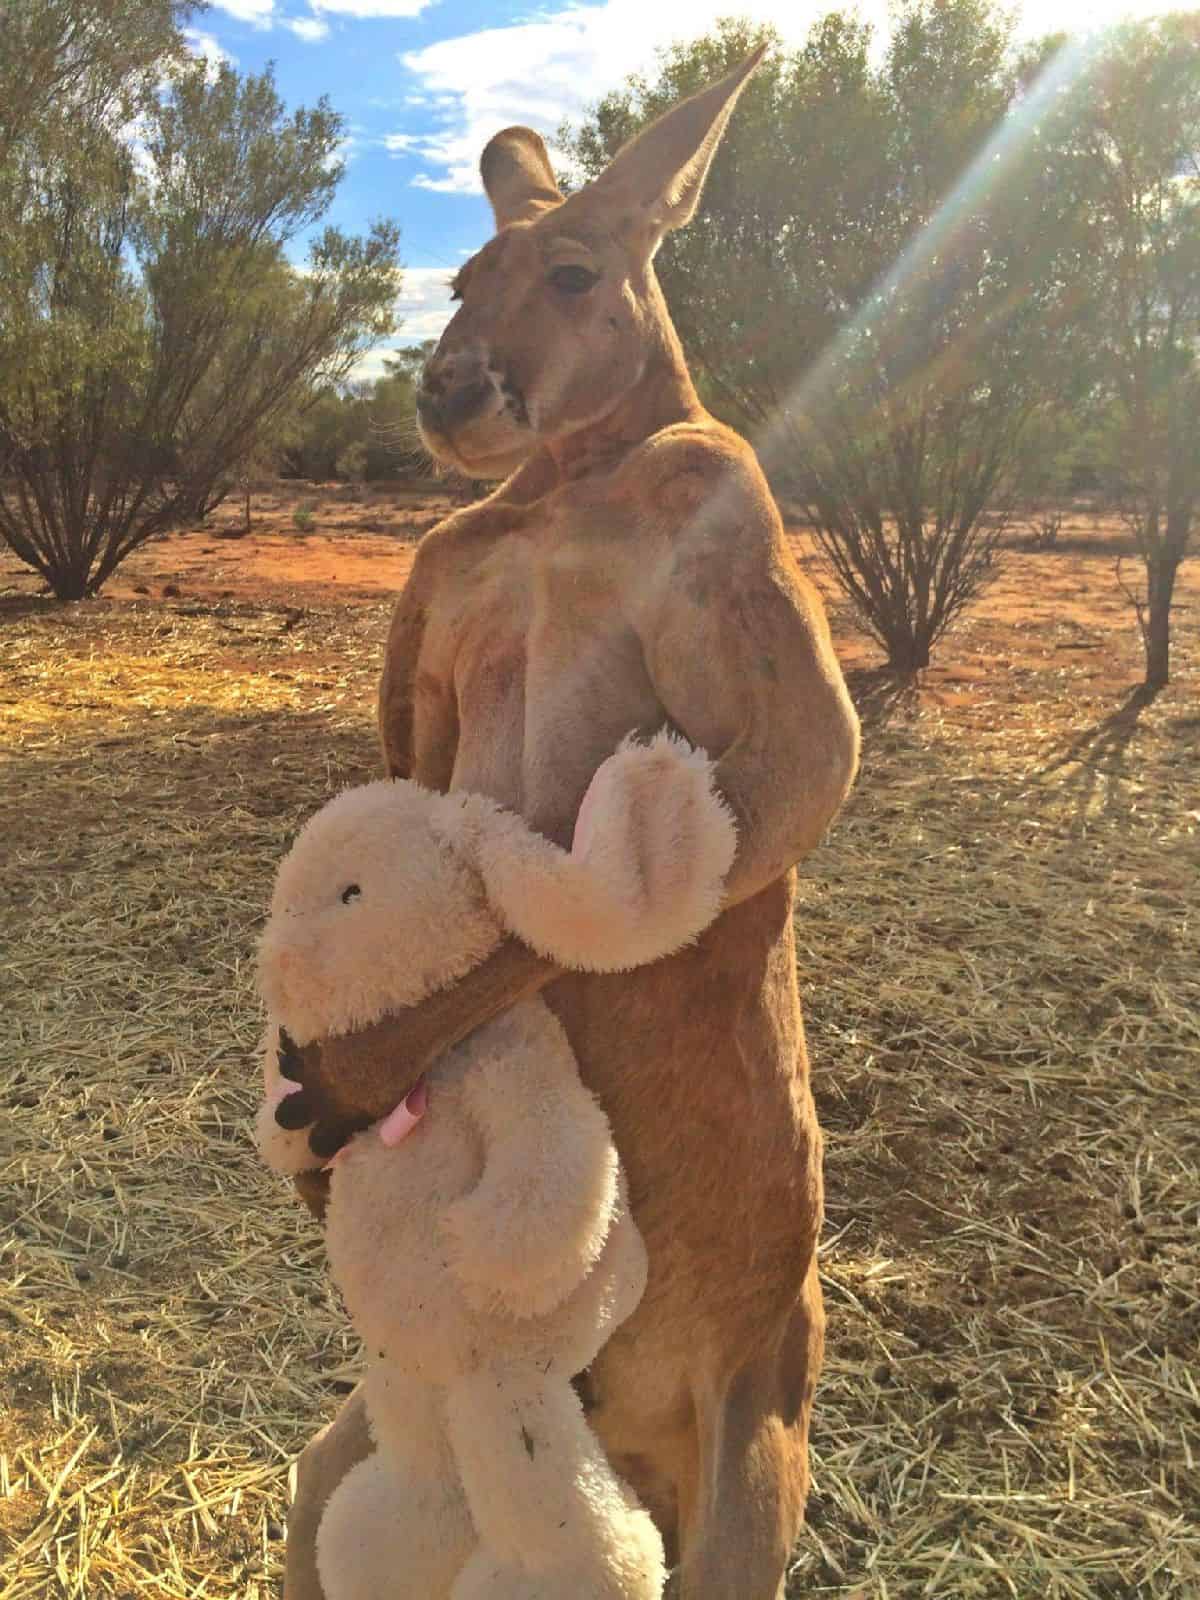 The kangaroo with his teddy bear